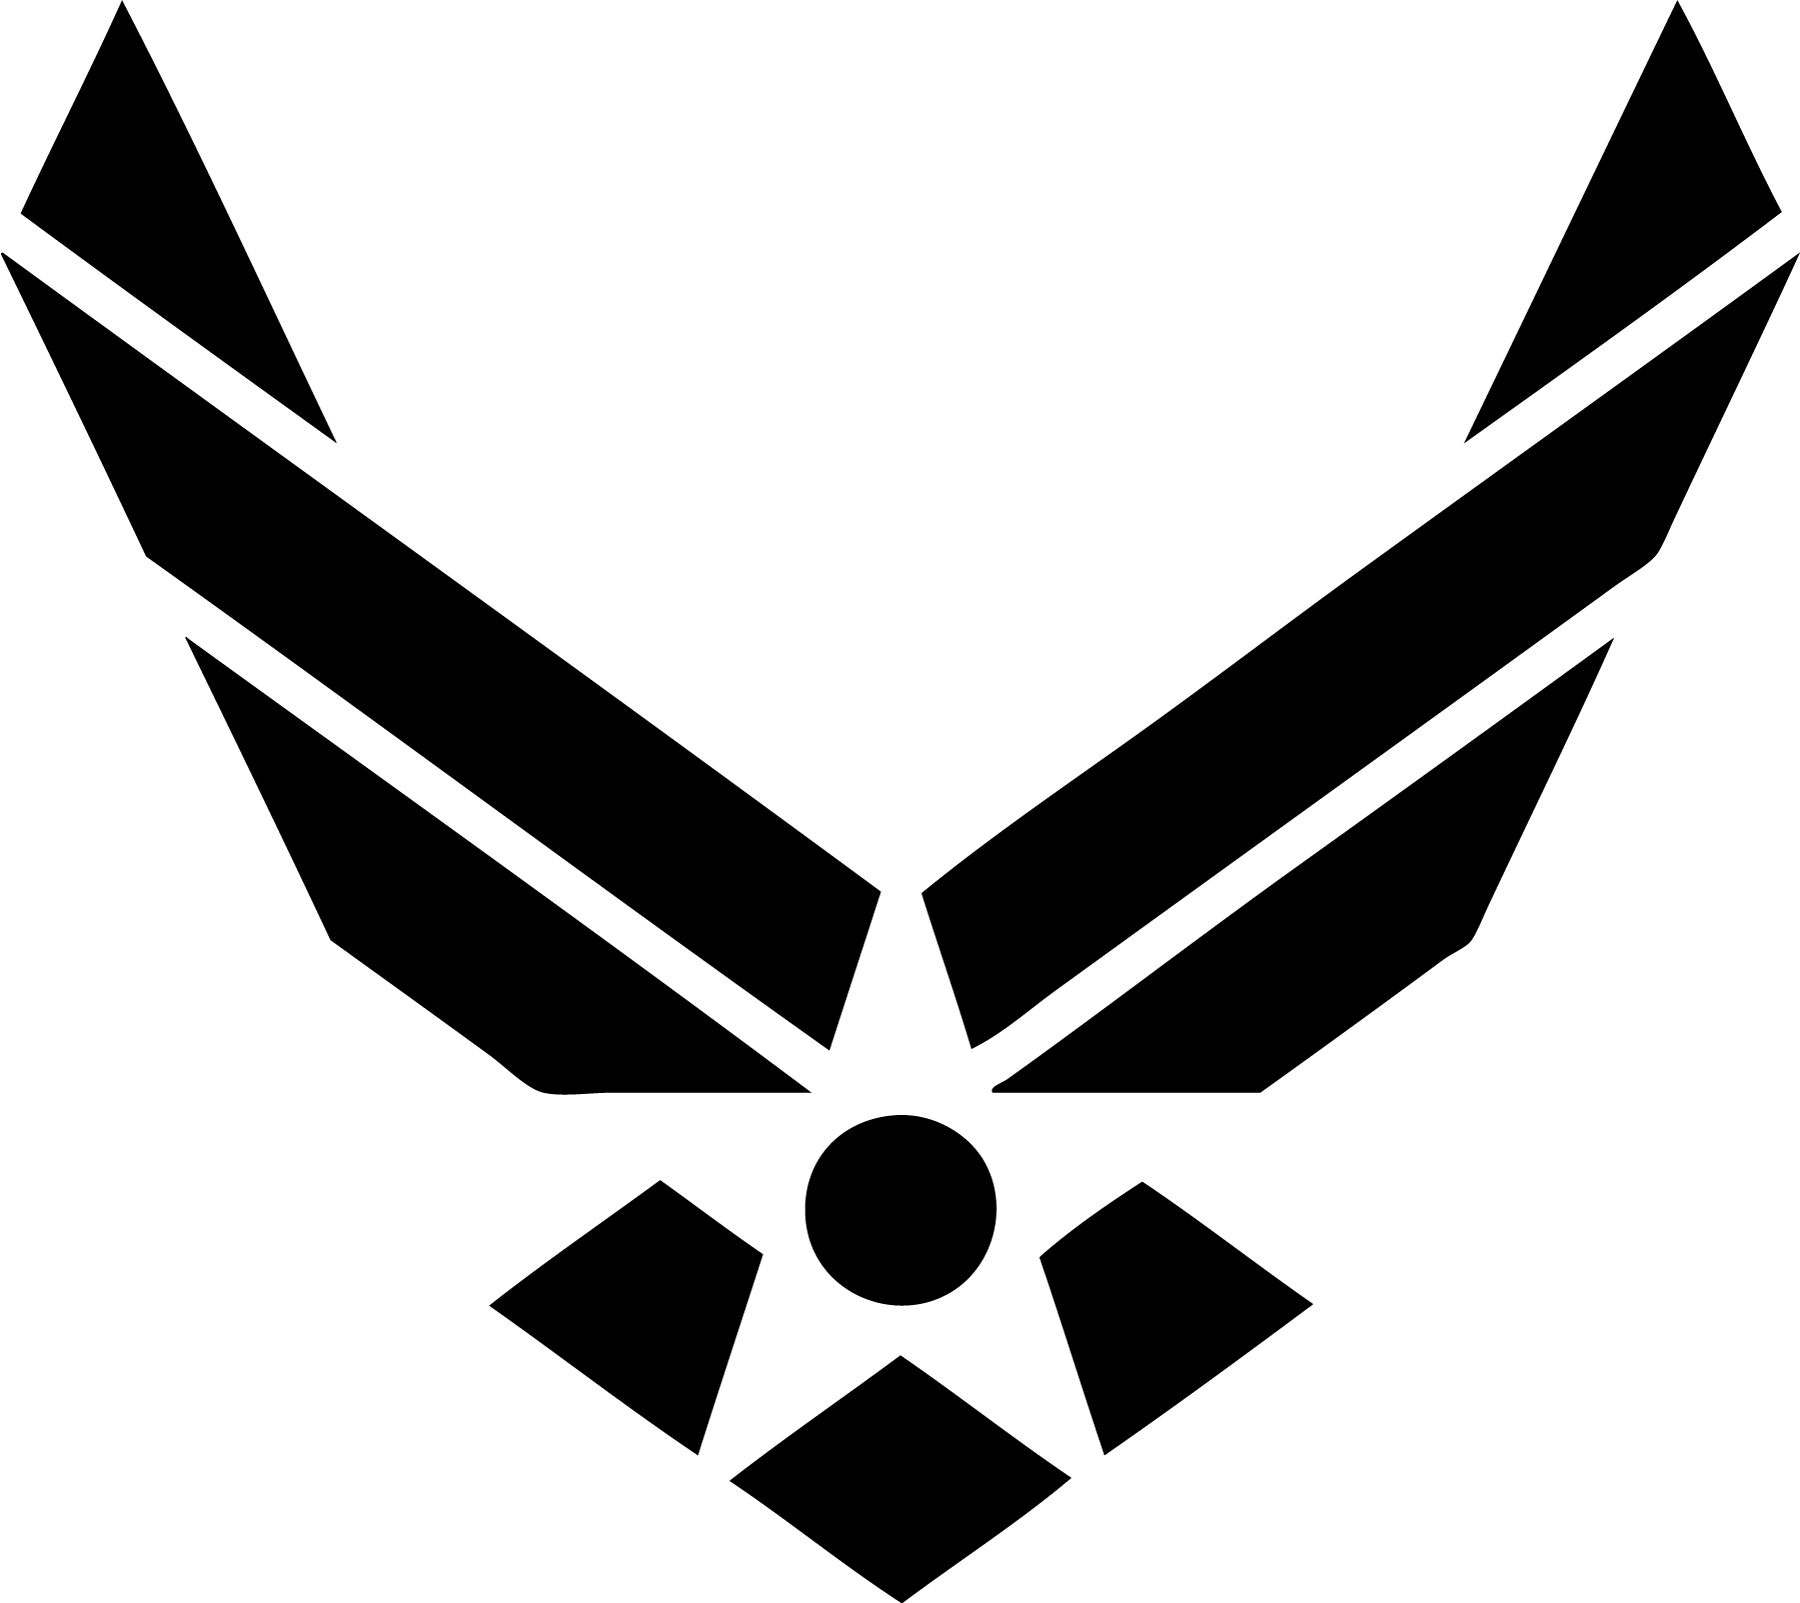 U.S. Army Air Force Logo - Military Logos Vector - Army, Navy, Air Force, Marines, Coast Guard